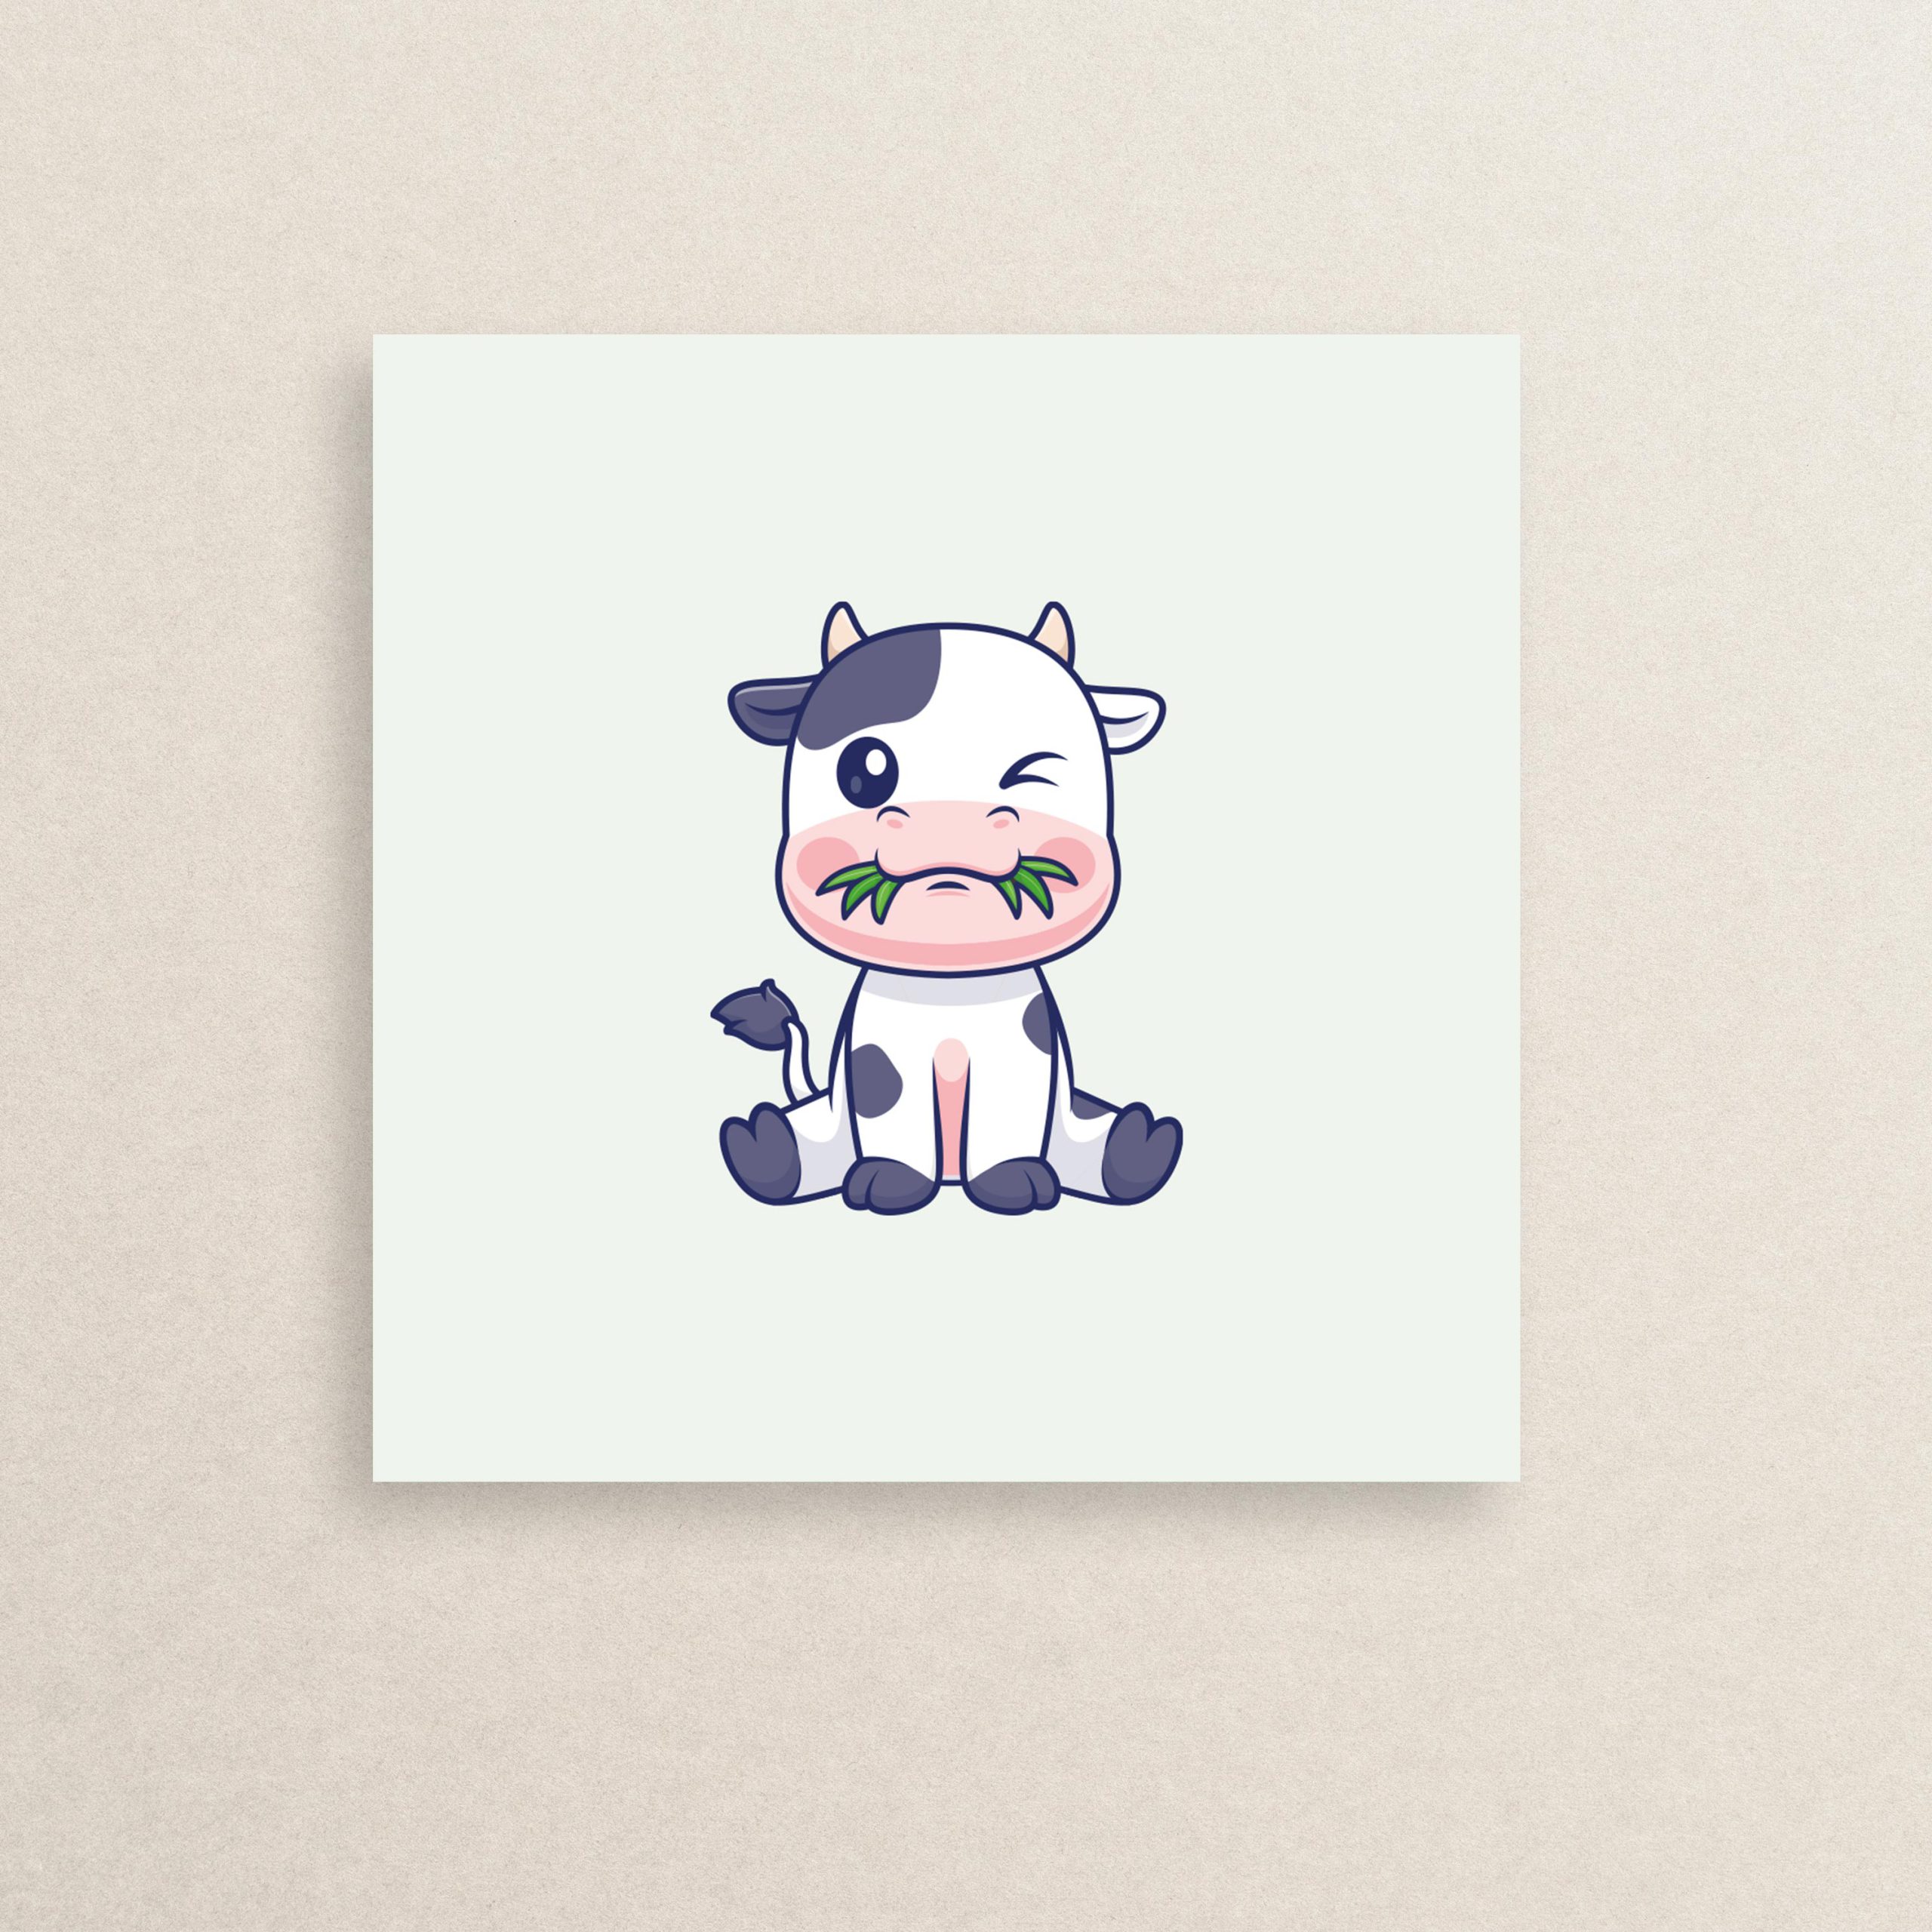 استیکر گاو گوگولی 01 | The cute cow sticker 01